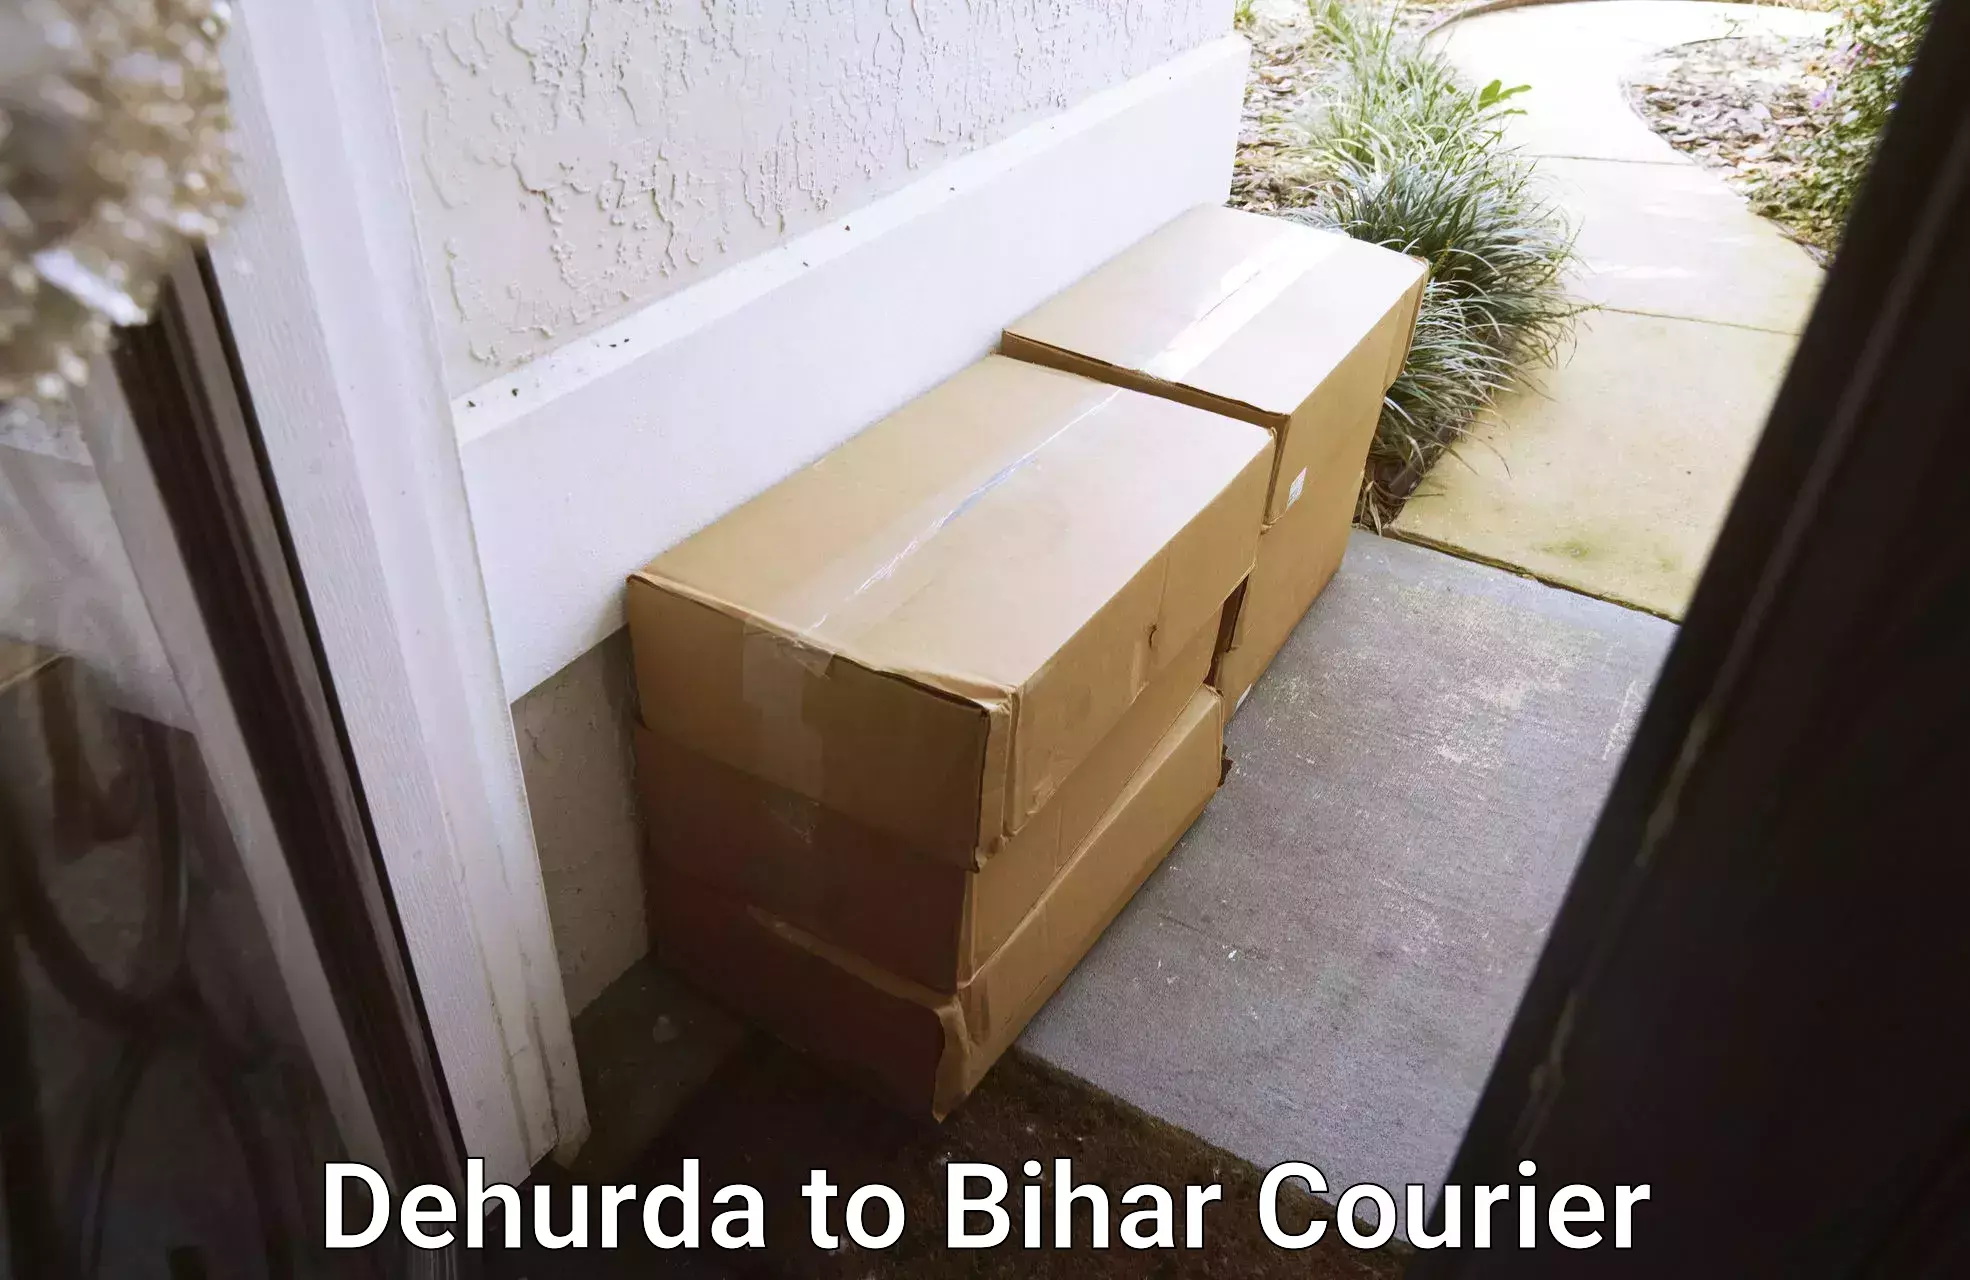 Courier service comparison in Dehurda to Sahebpur Kamal